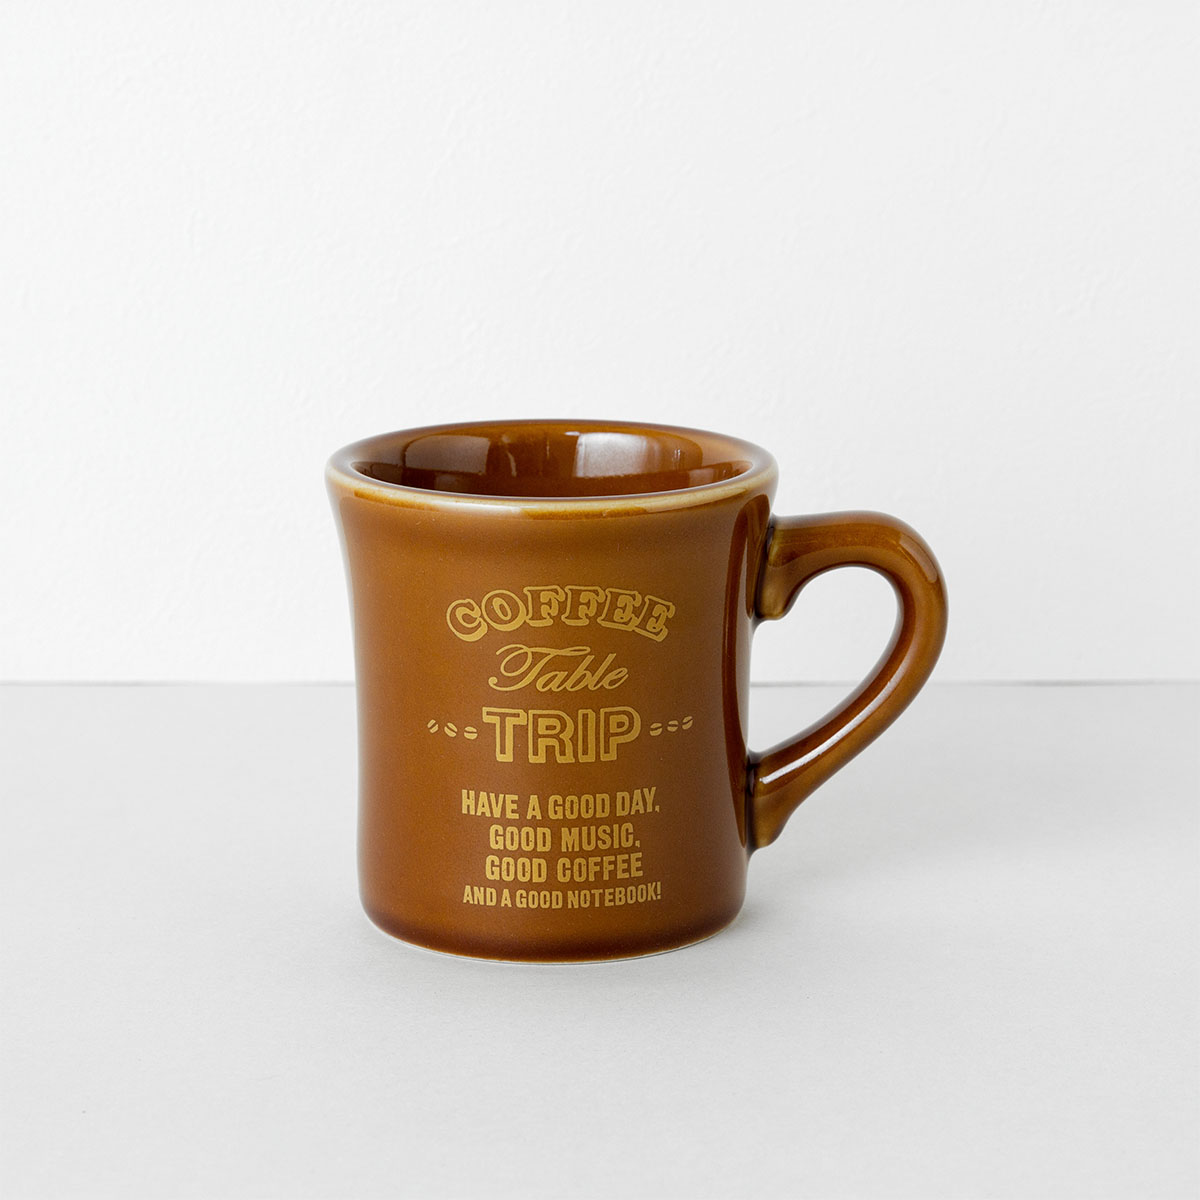 Traveler's Factory Coffee Table Mug Cup [07100-244] - Brown